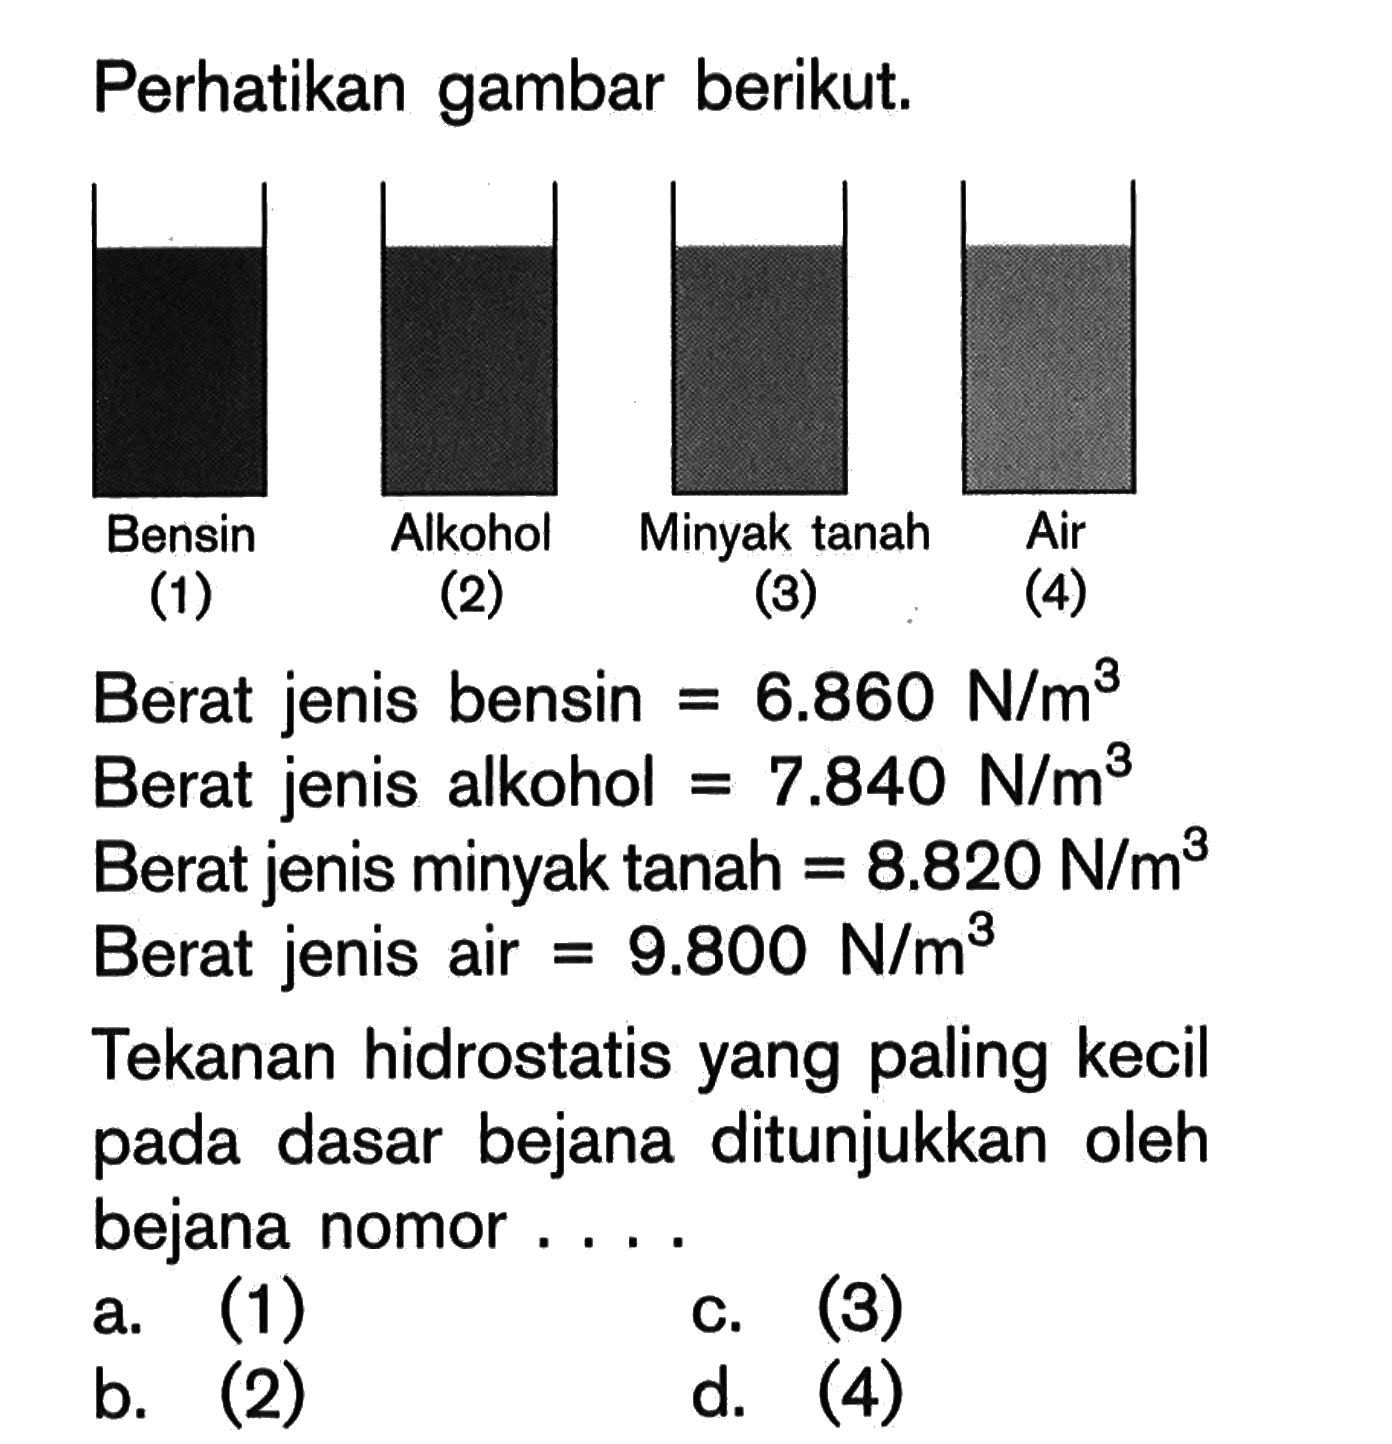 Perhatikan gambar berikut. Bensin (1) Alkohol (2) Minyak tanah (3) Air (4) Berat jenis bensin = 6.860 N/m^3 Berat jenis alkohol = 7.840 N/m^3 Berat jenis minyak tanah = 8.820 N/m^3 Berat jenis air = 9.800 N/m^3Tekanan hidrostatis yang paling kecil pada dasar bejana ditunjukkan oleh bejana nomor .... a. (1) c. (3) b. (2) d. (4)